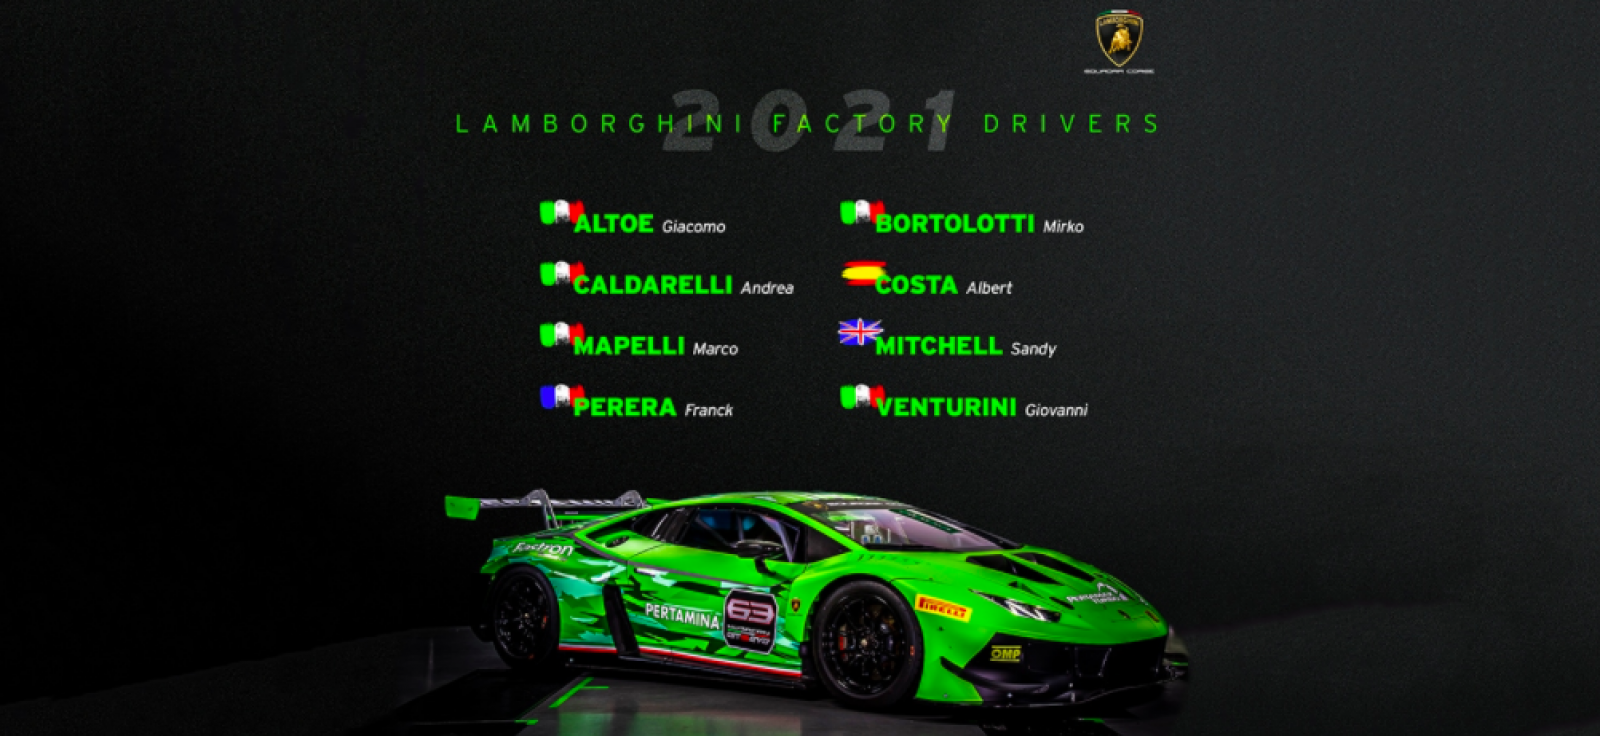 Lamborghini names 2021 factory drivers